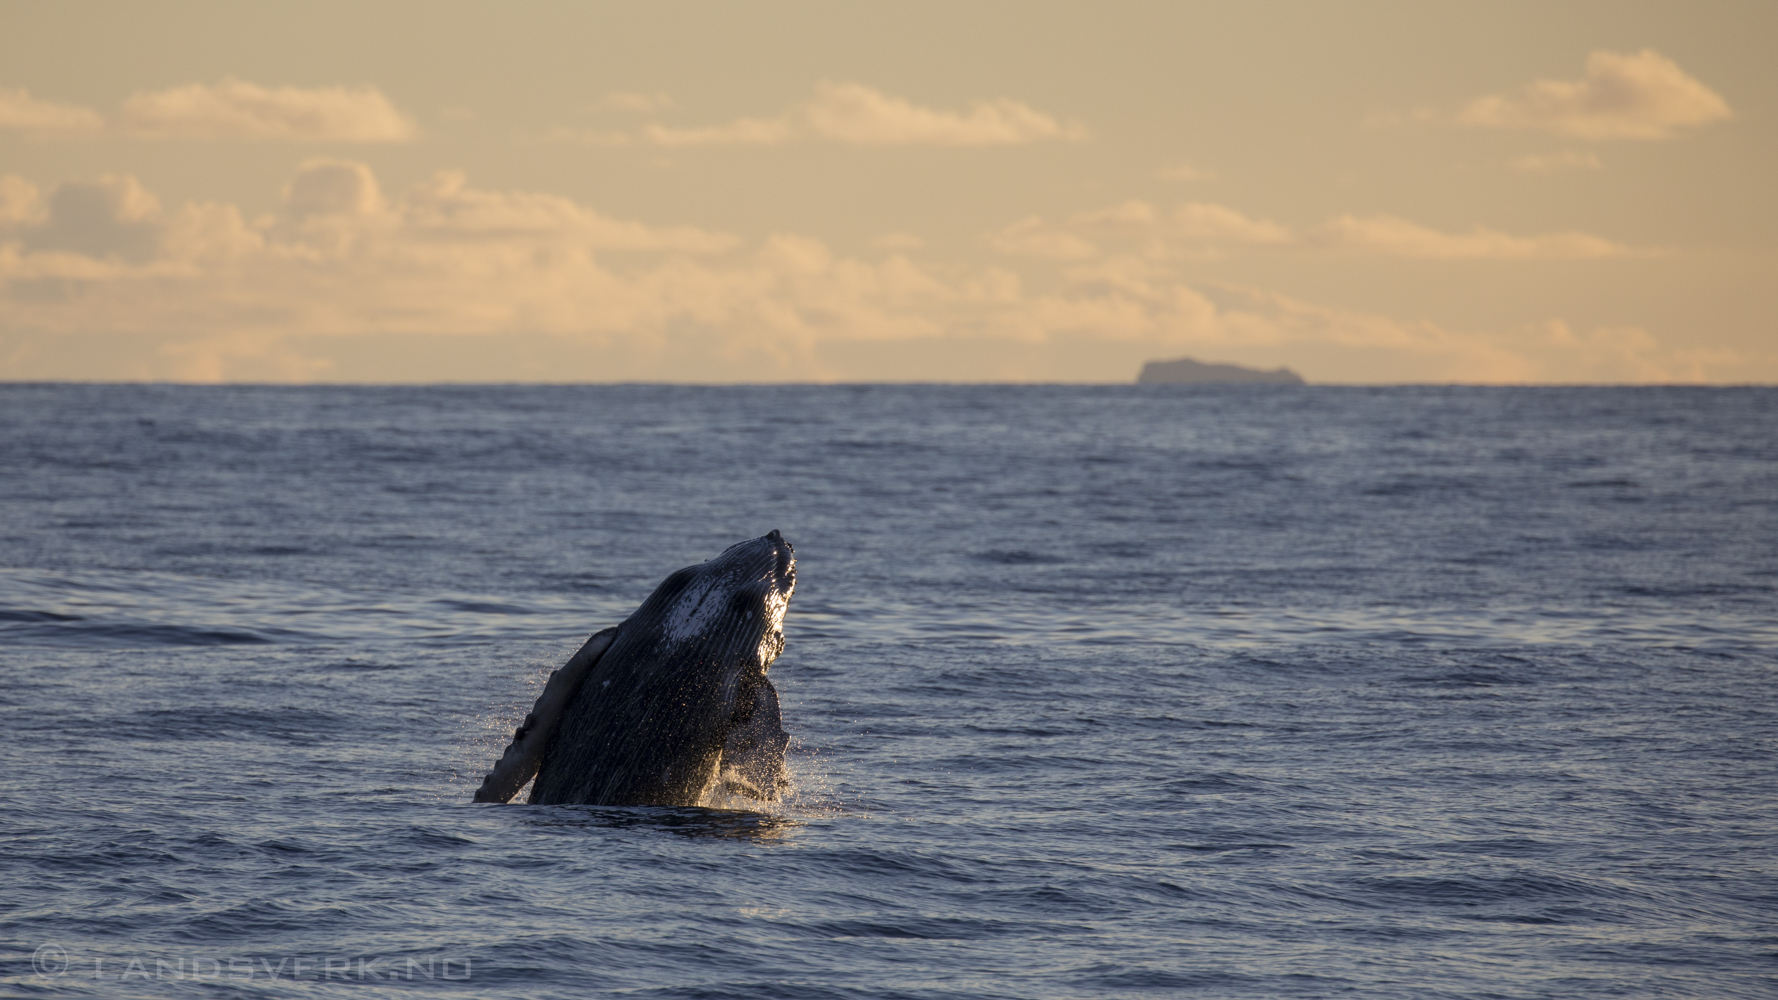 Humpback whale. Calf playing outside the west coast of Kauai, Hawaii. 

(Canon EOS 5D Mark IV / Canon EF 100-400mm f/4.5-5.6 L IS II USM)